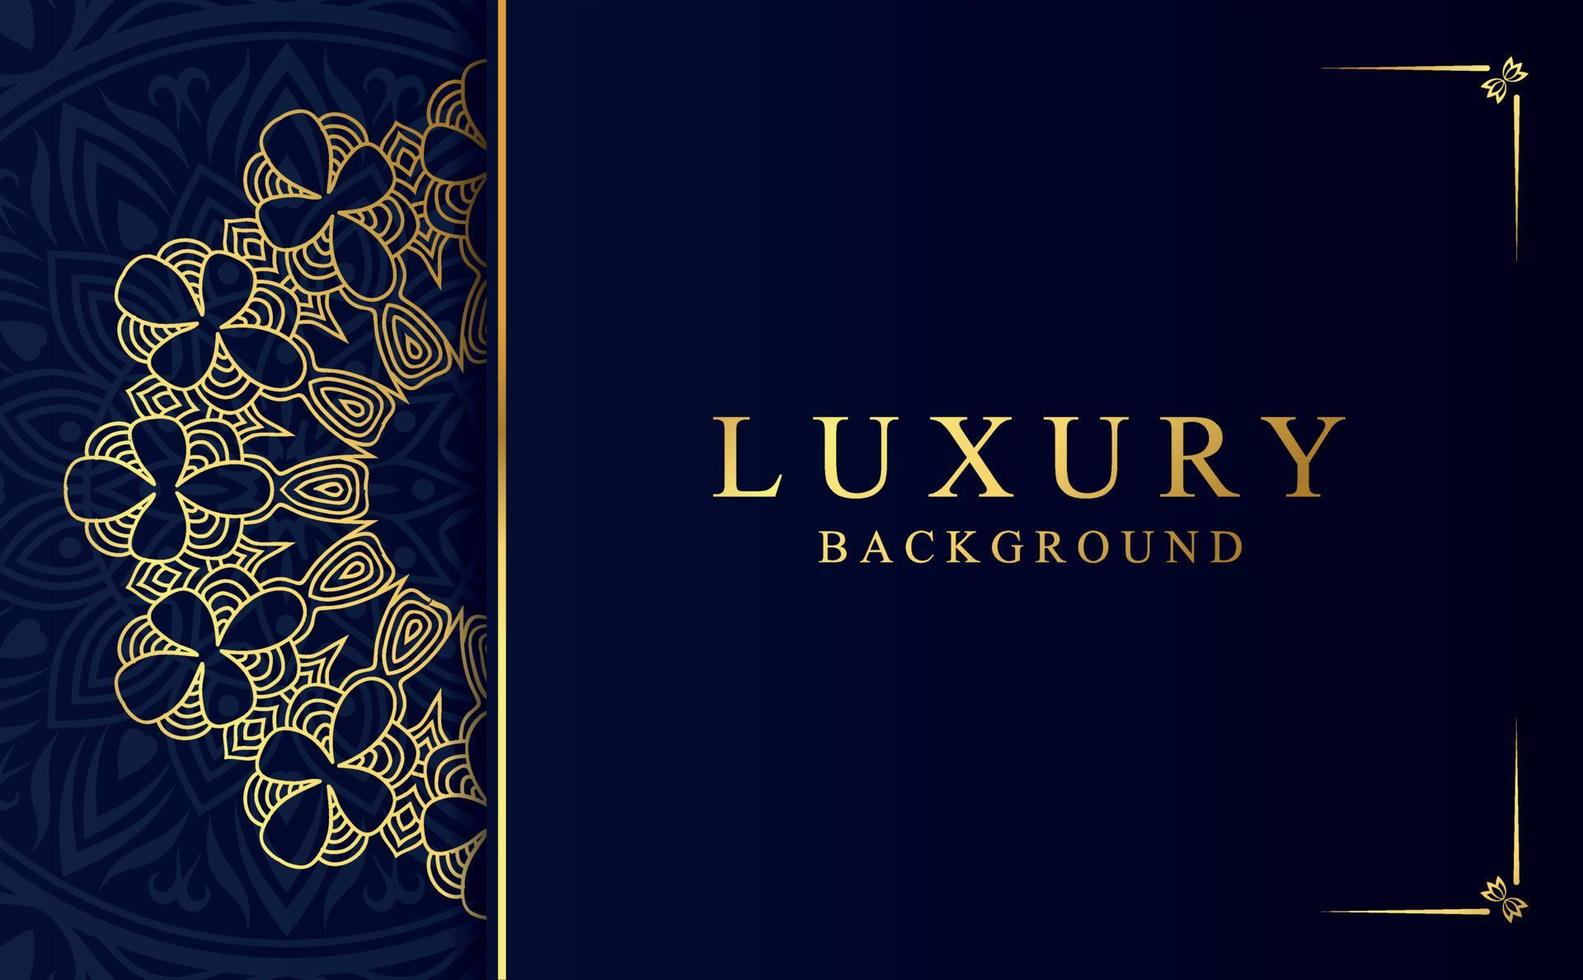 Luxury golden mandala design background in Arabic style vector